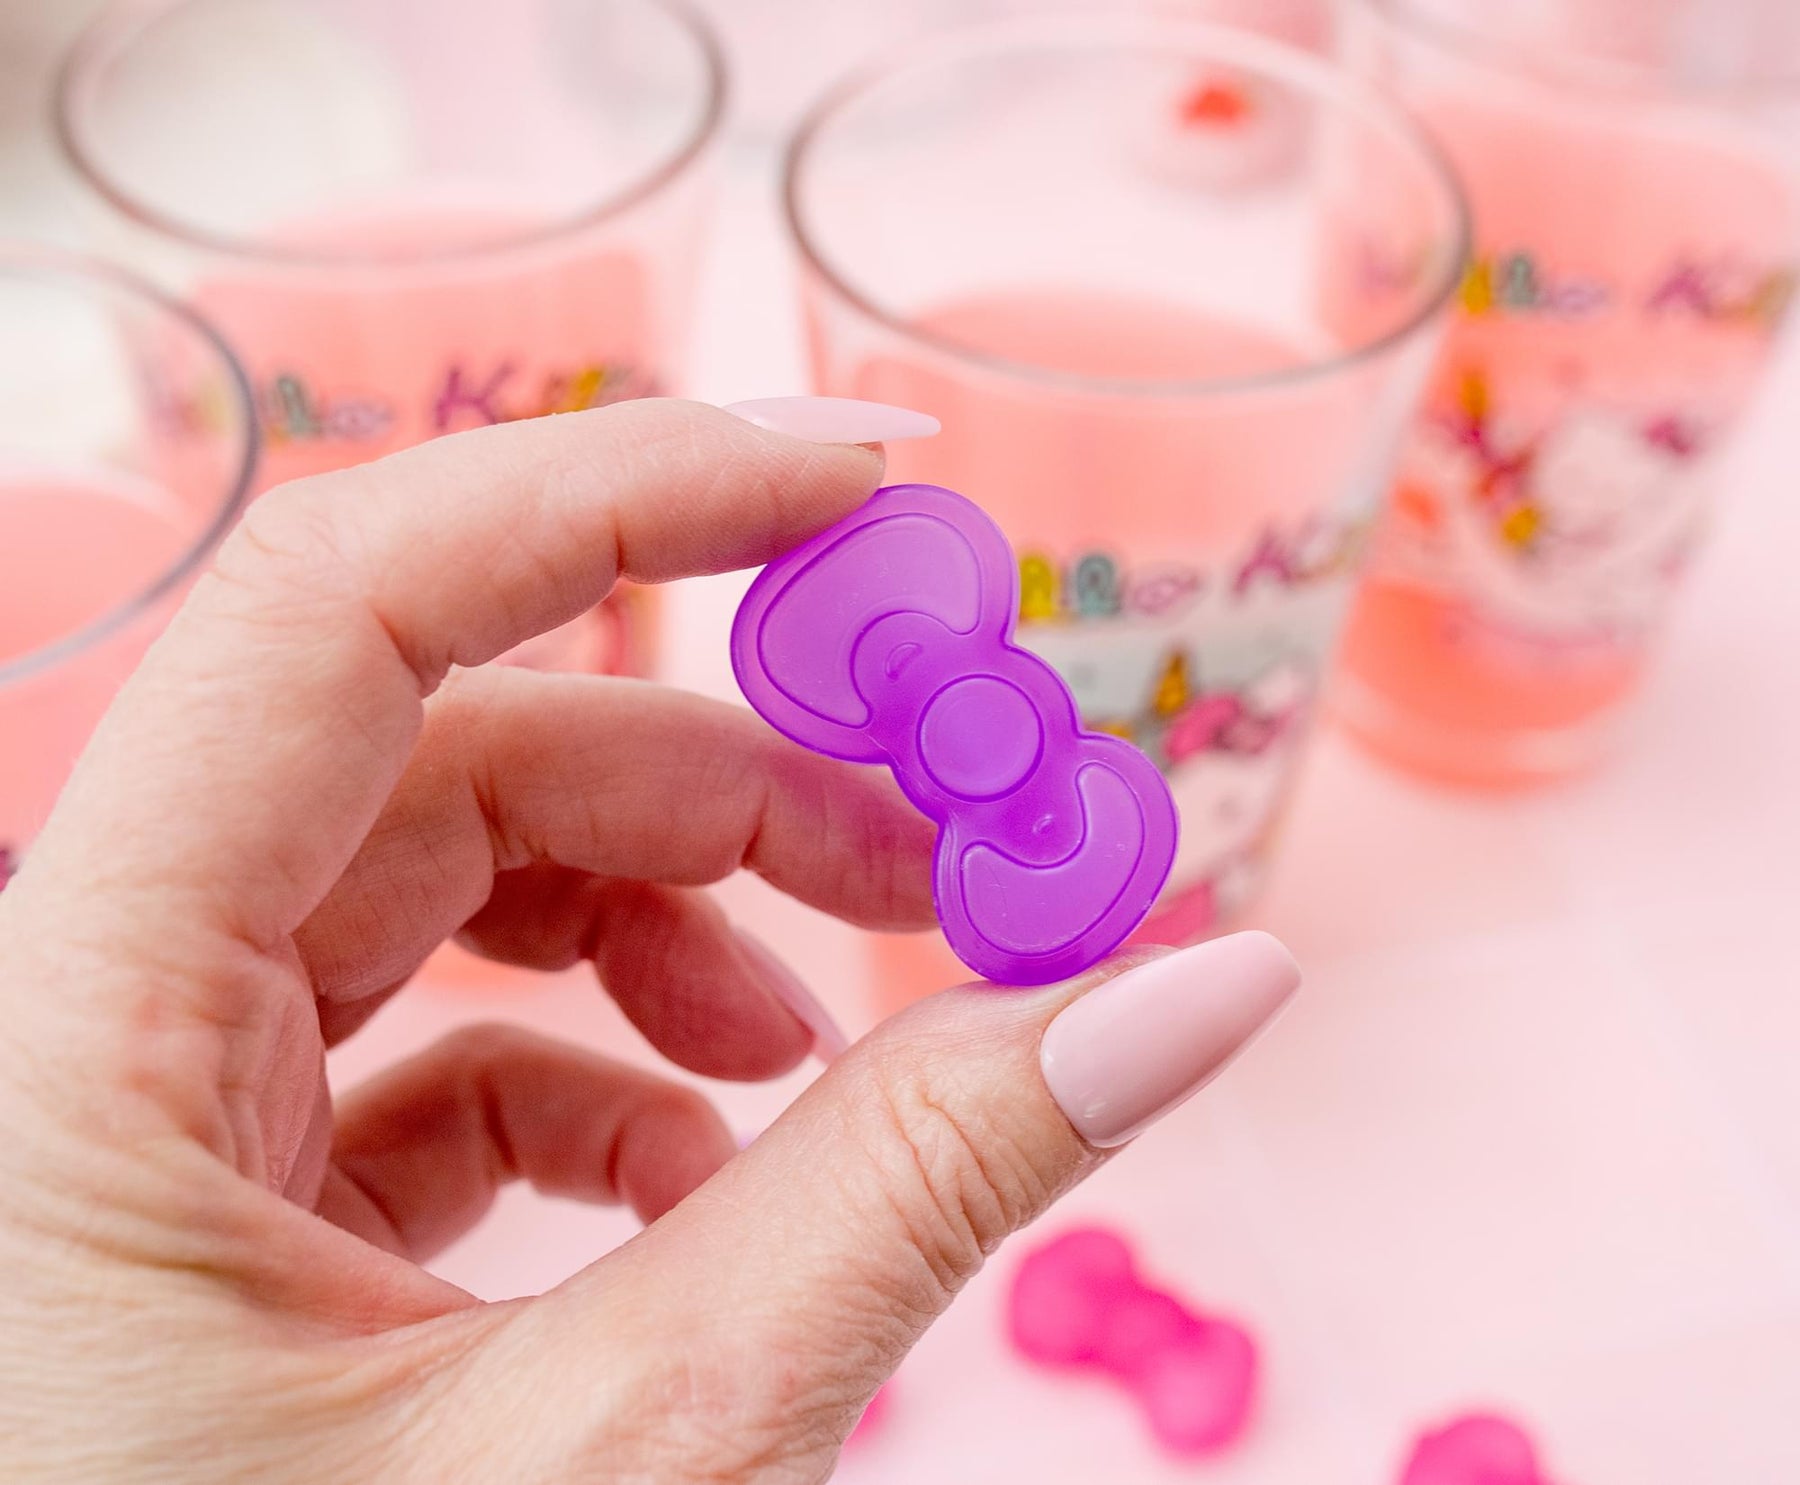 Sanrio Hello Kitty Pretty Bows Reusable Plastic Ice Cubes | Set of 6